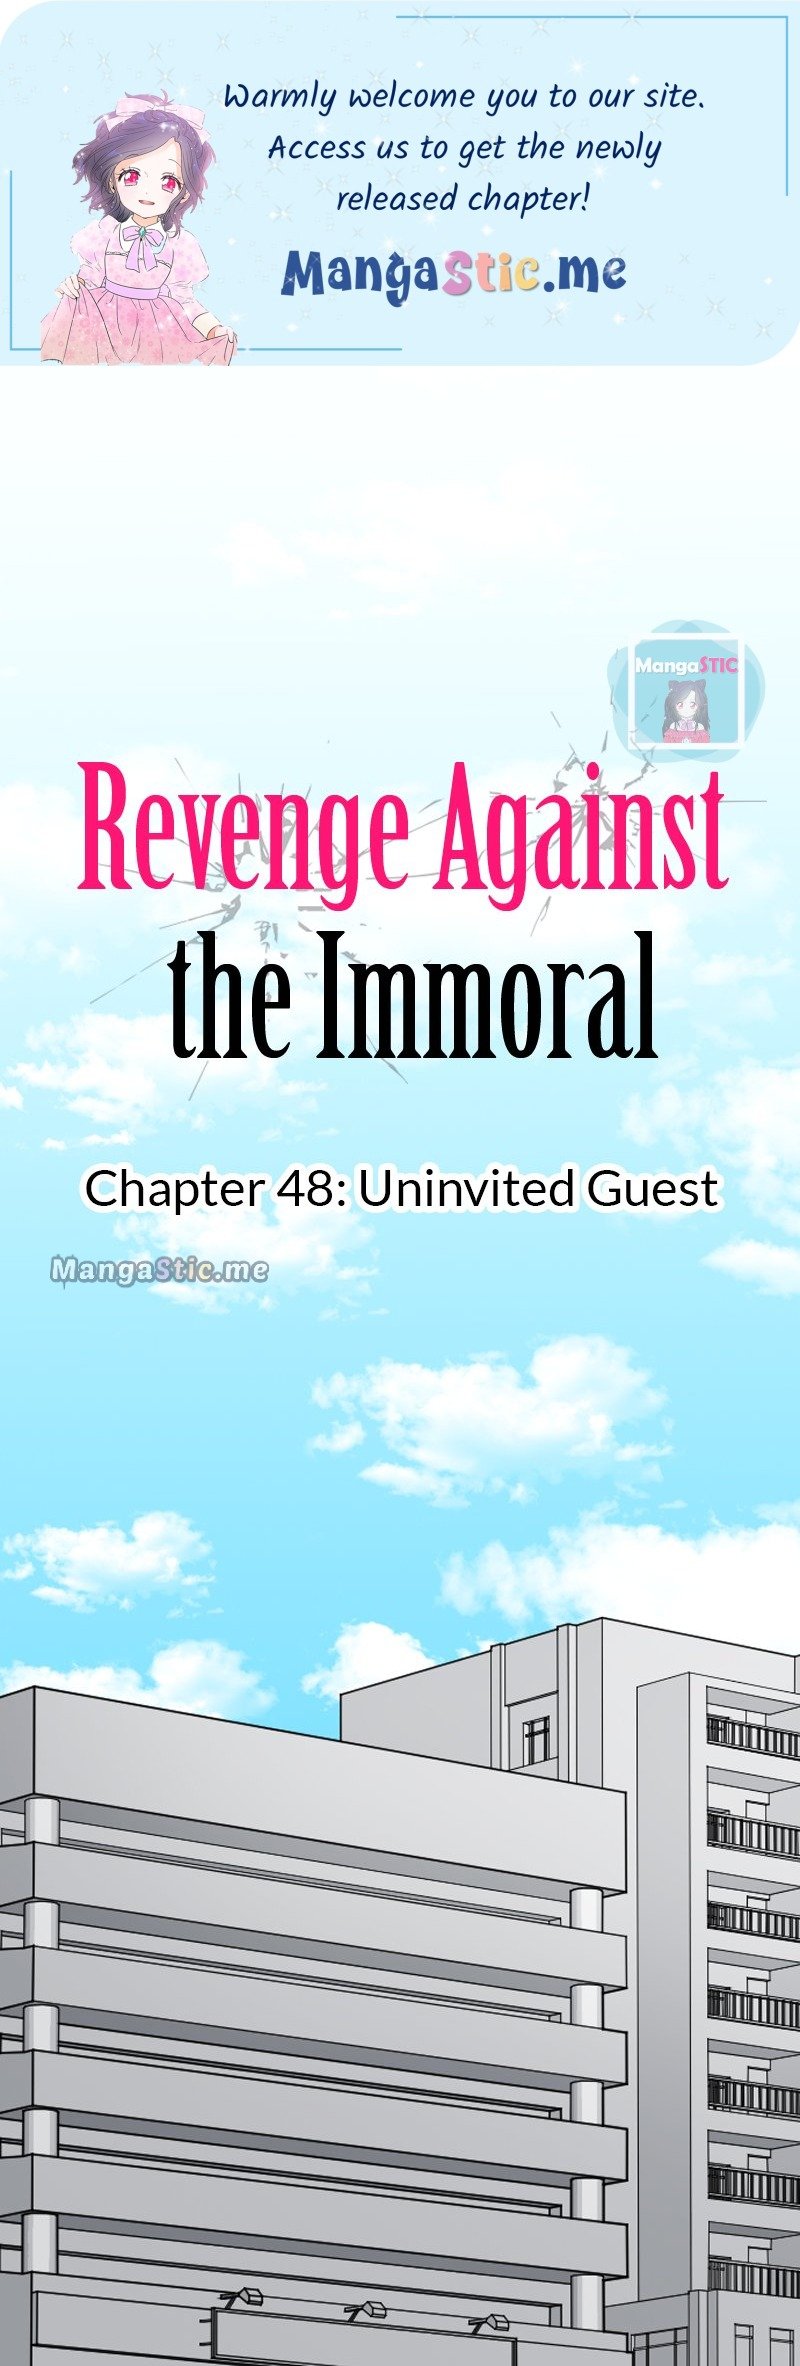 Revenge Against the Immoral chapter 48